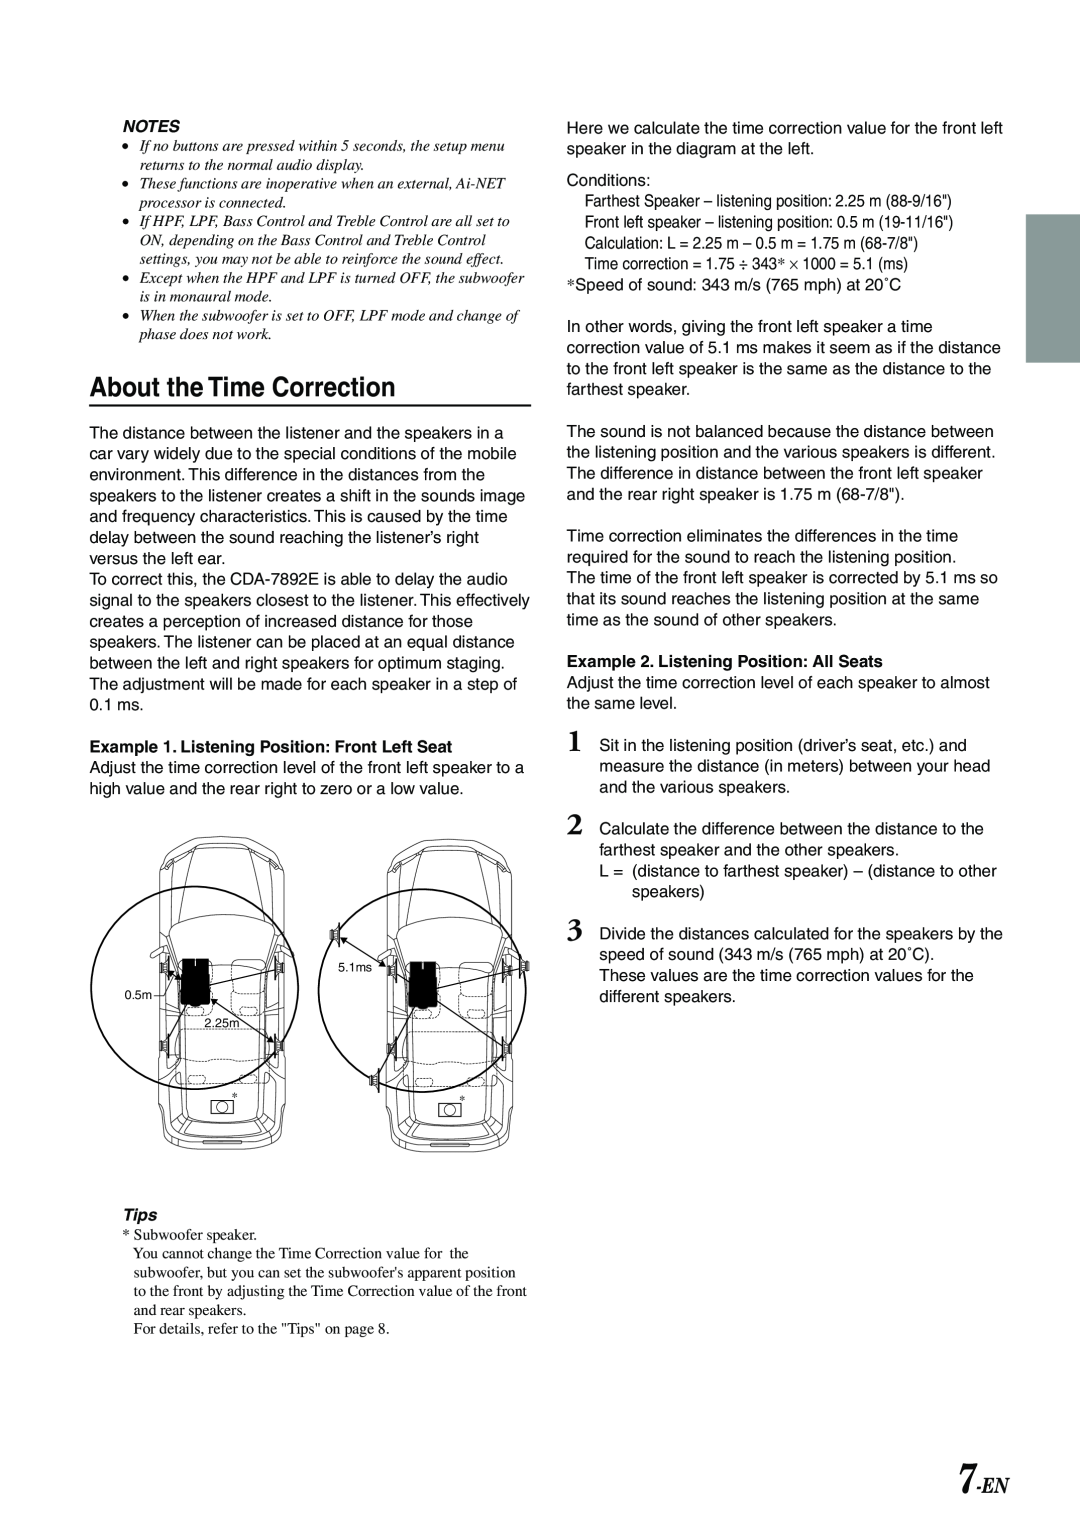 Alpine CDA-7892E owner manual About the Time Correction, 7-EN, Tips 